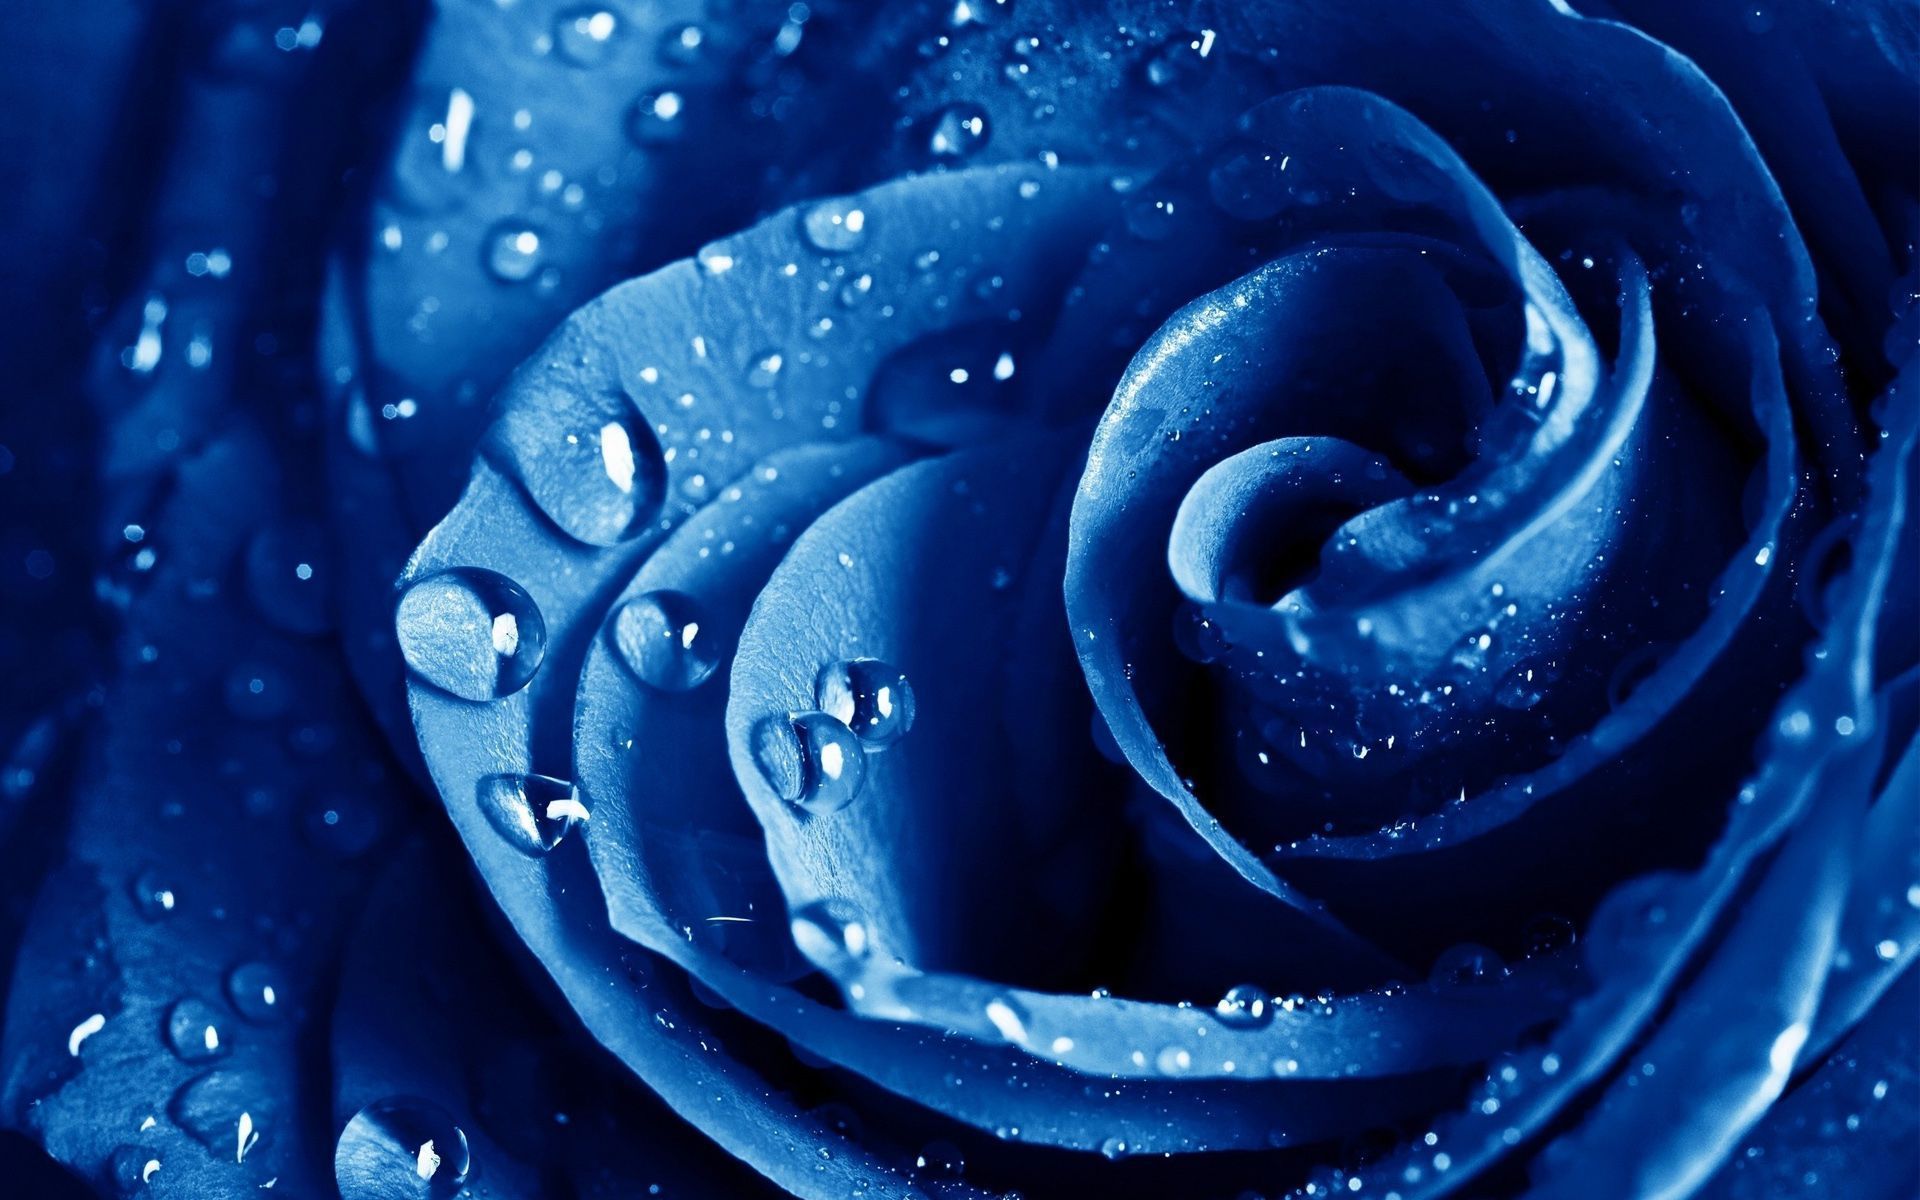 Blue Rose Desktop Wallpaper, Blue Rose Images Free | Cool Wallpapers